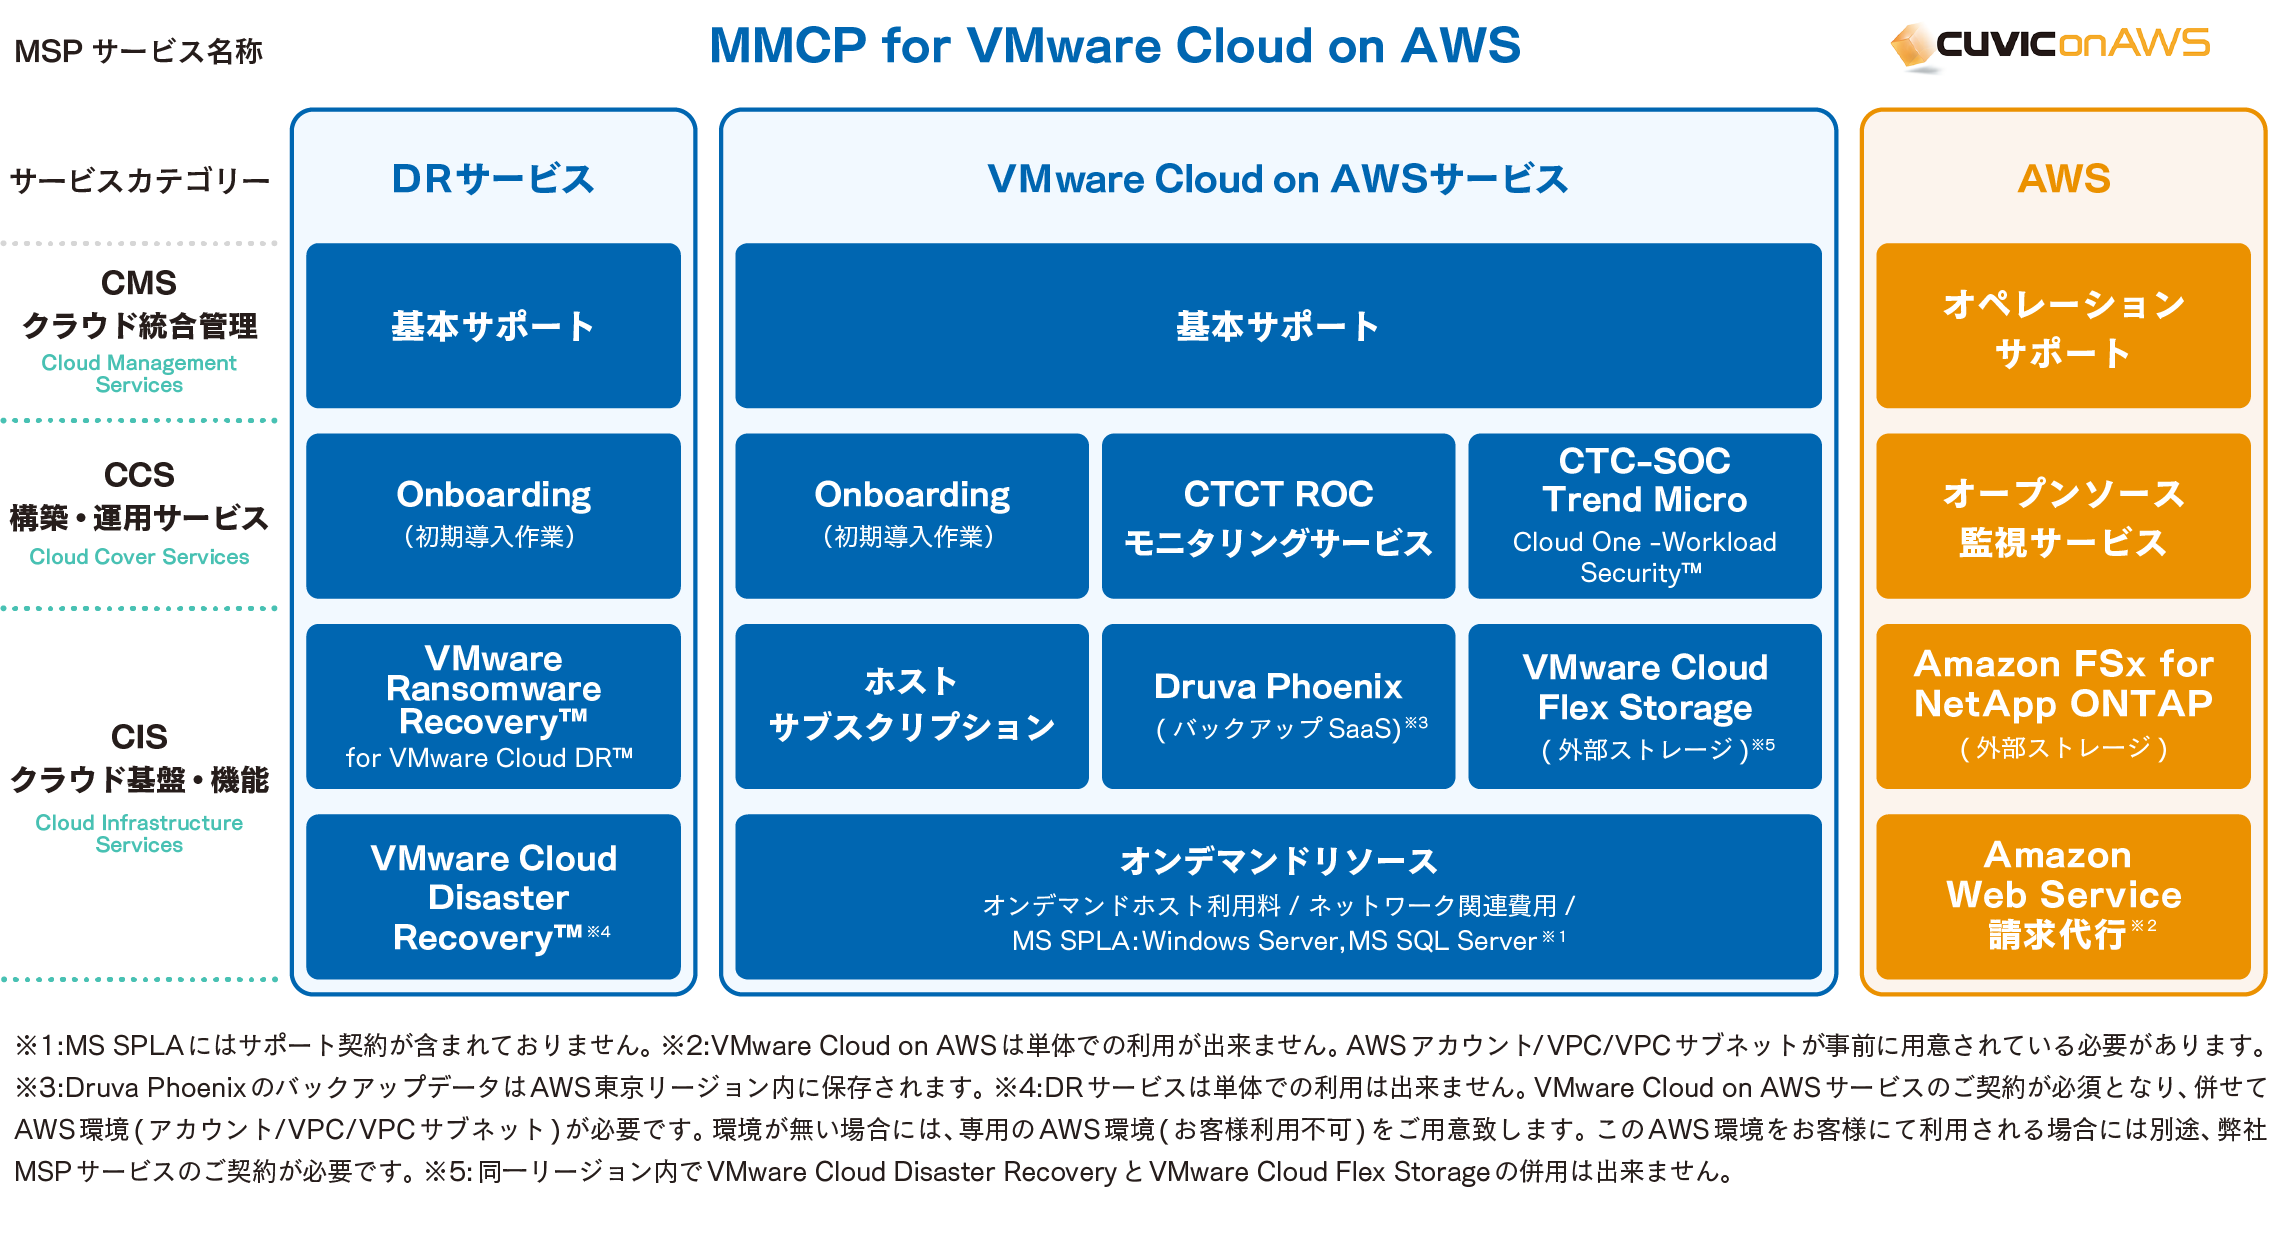 MMCP for VMware Cloud on AWS メニュー構成